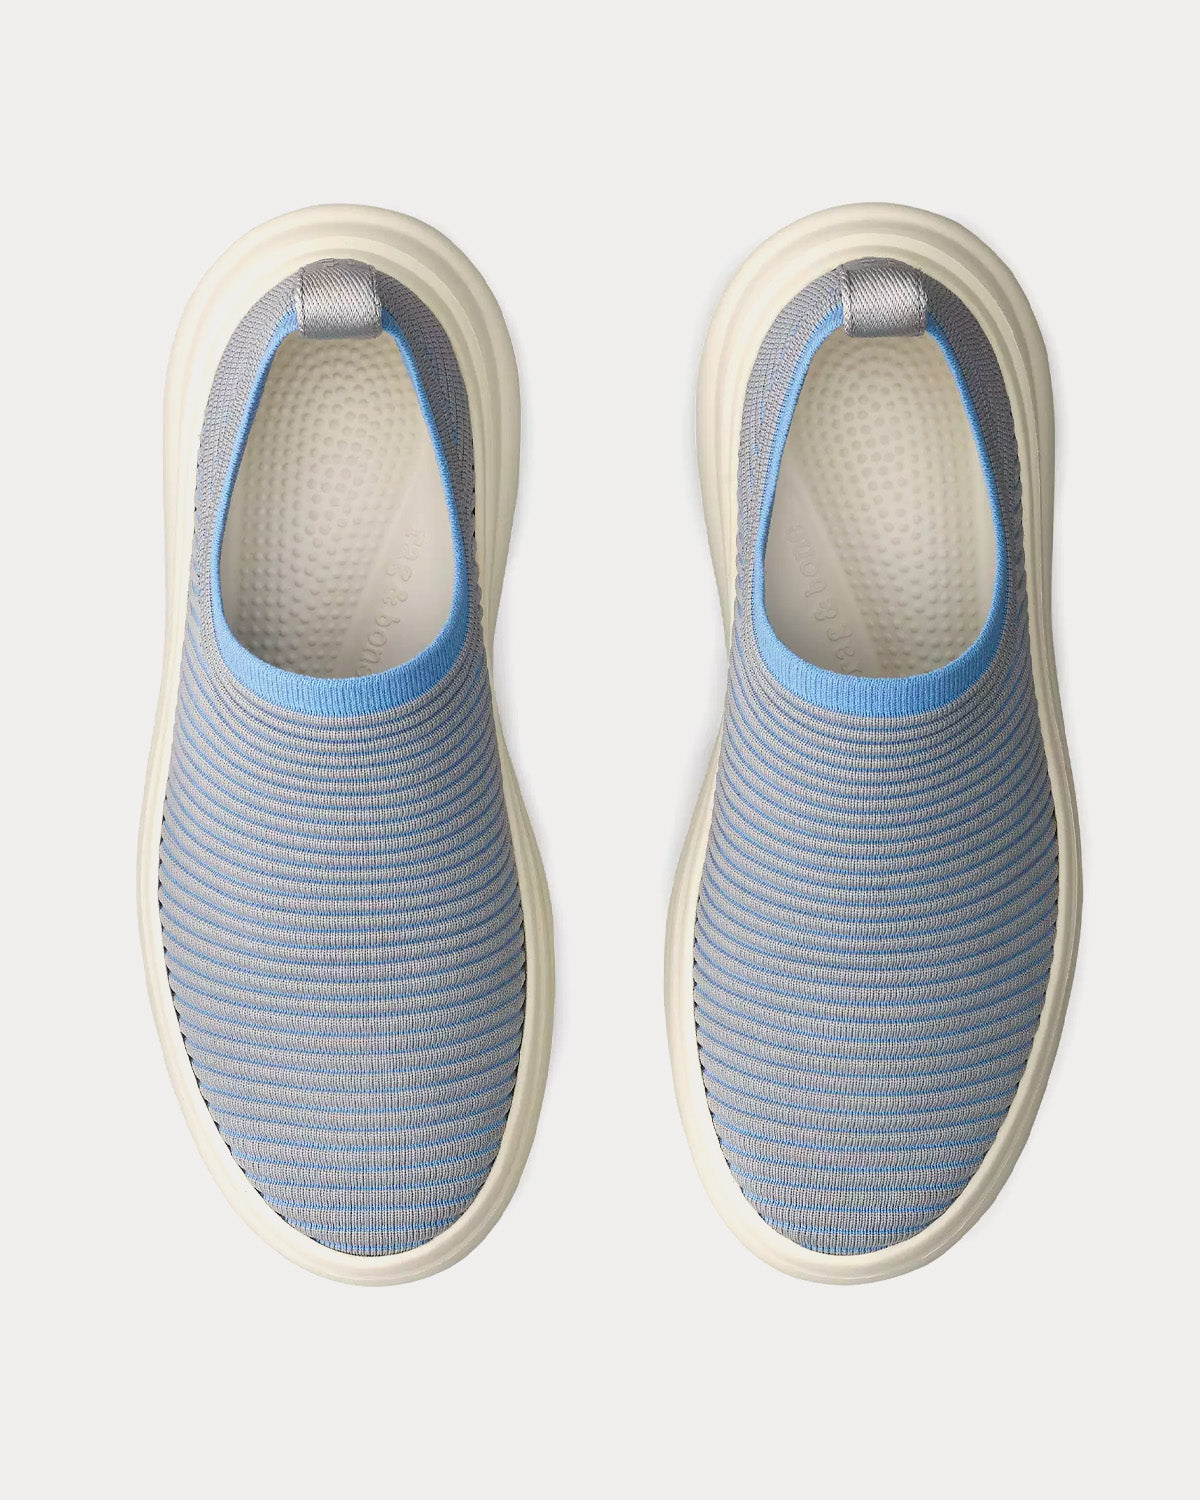 Rag & Bone - Brixley Knit Grey / Blue Slip On Sneakers